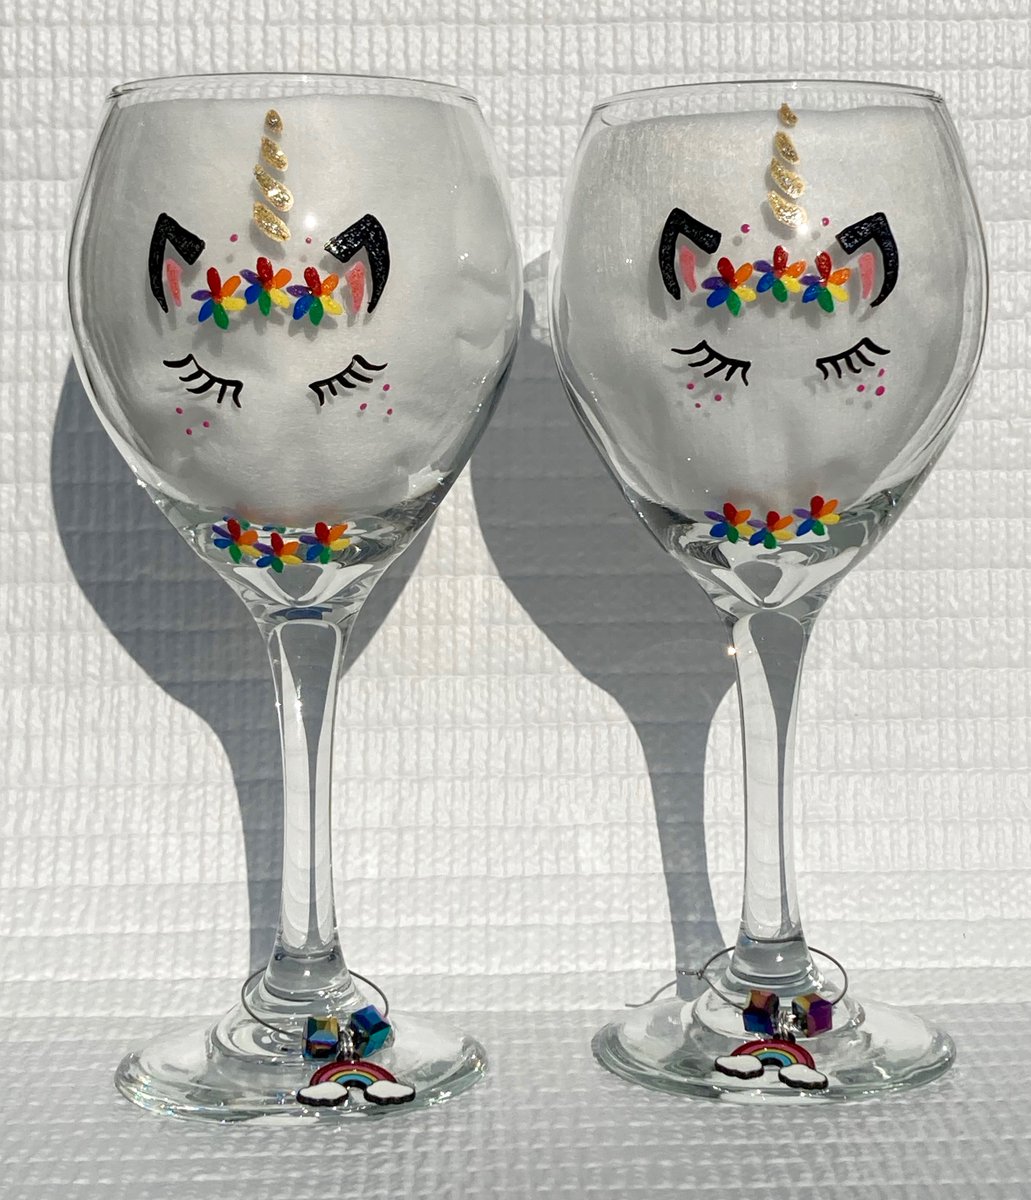 Great gift for a unicorn lover etsy.com/listing/910884… #unicorn #wineglasses #mothersdaygift #SMILEtt23 #etsyshop #CraftBizParty #EtsyHandmade #shopsmall